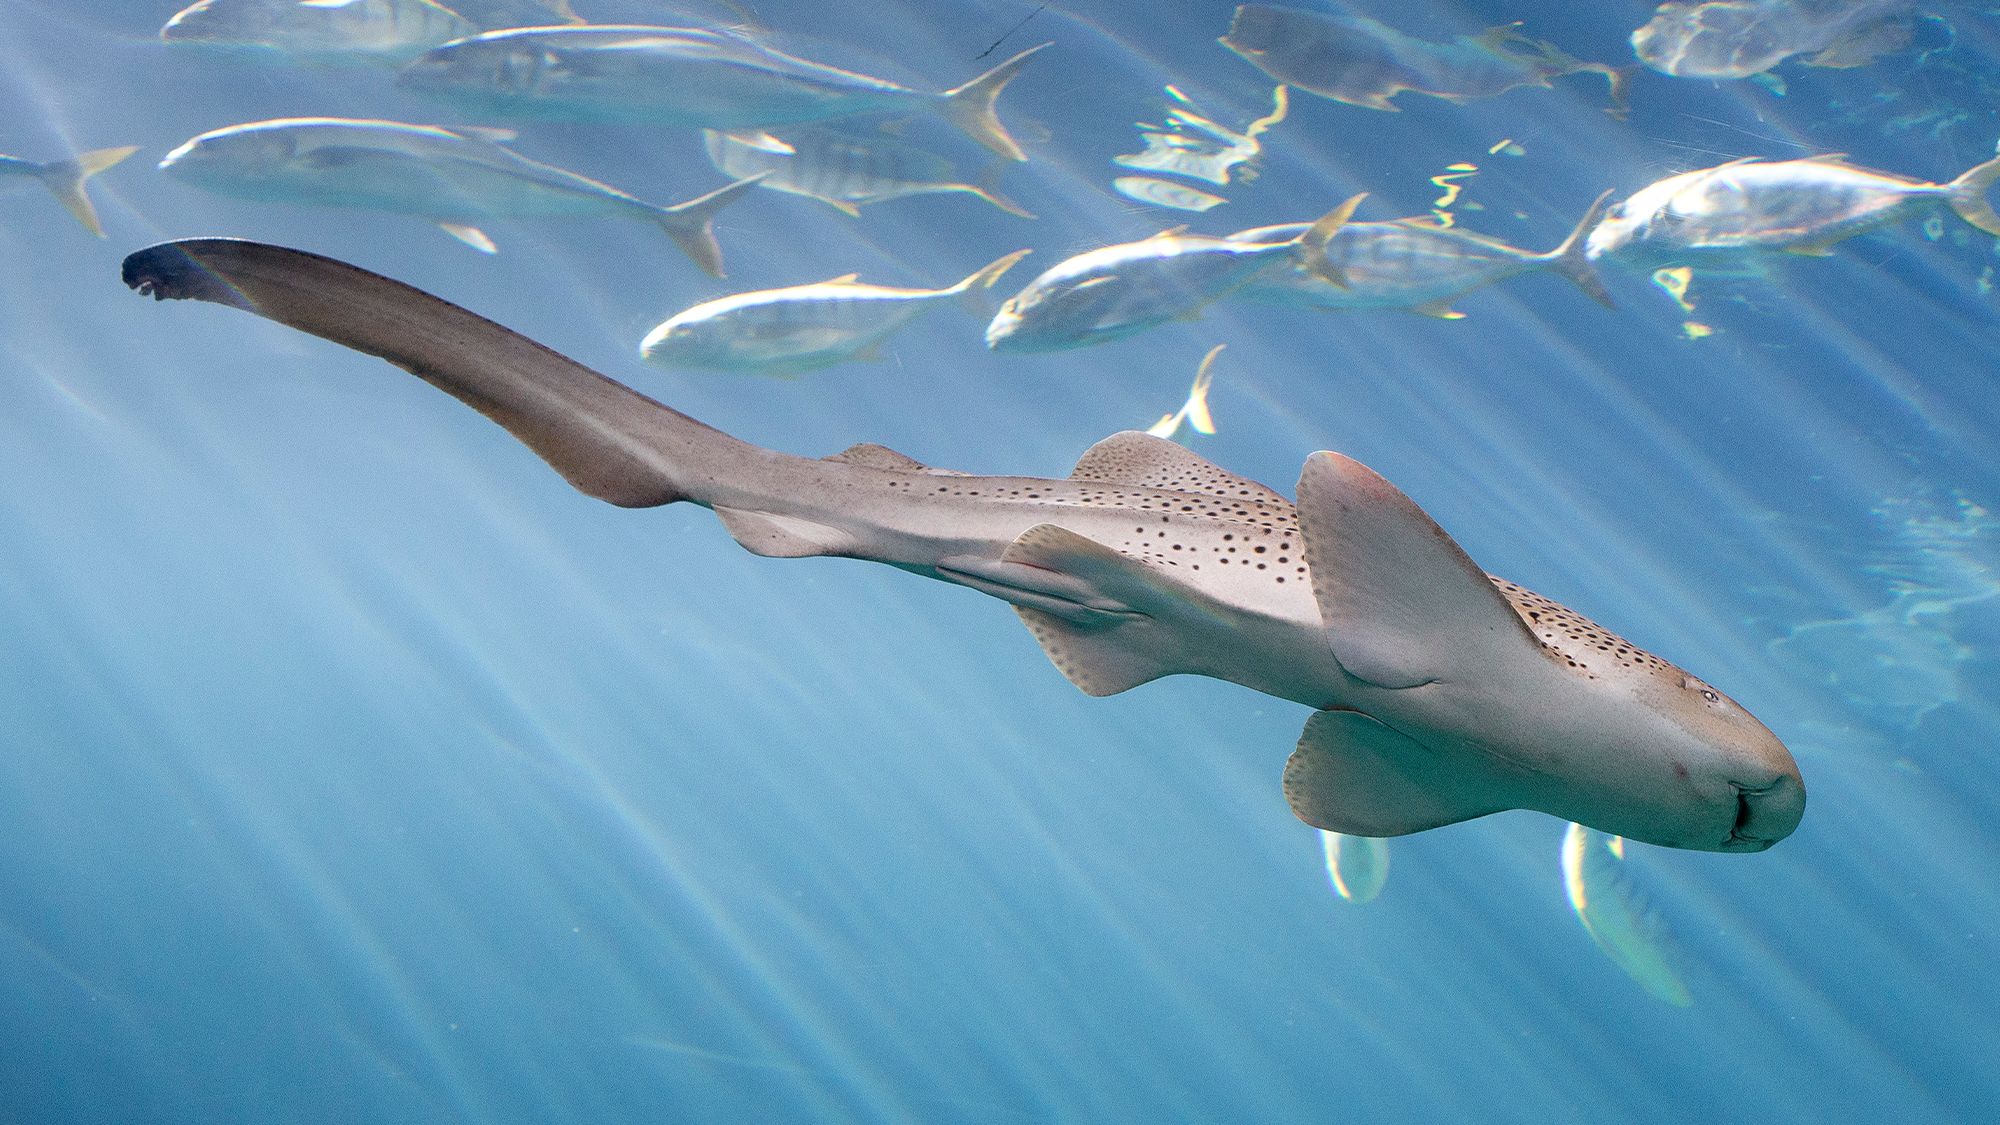 Baby shark born without sperm at Shedd Aquarium | Popular Science